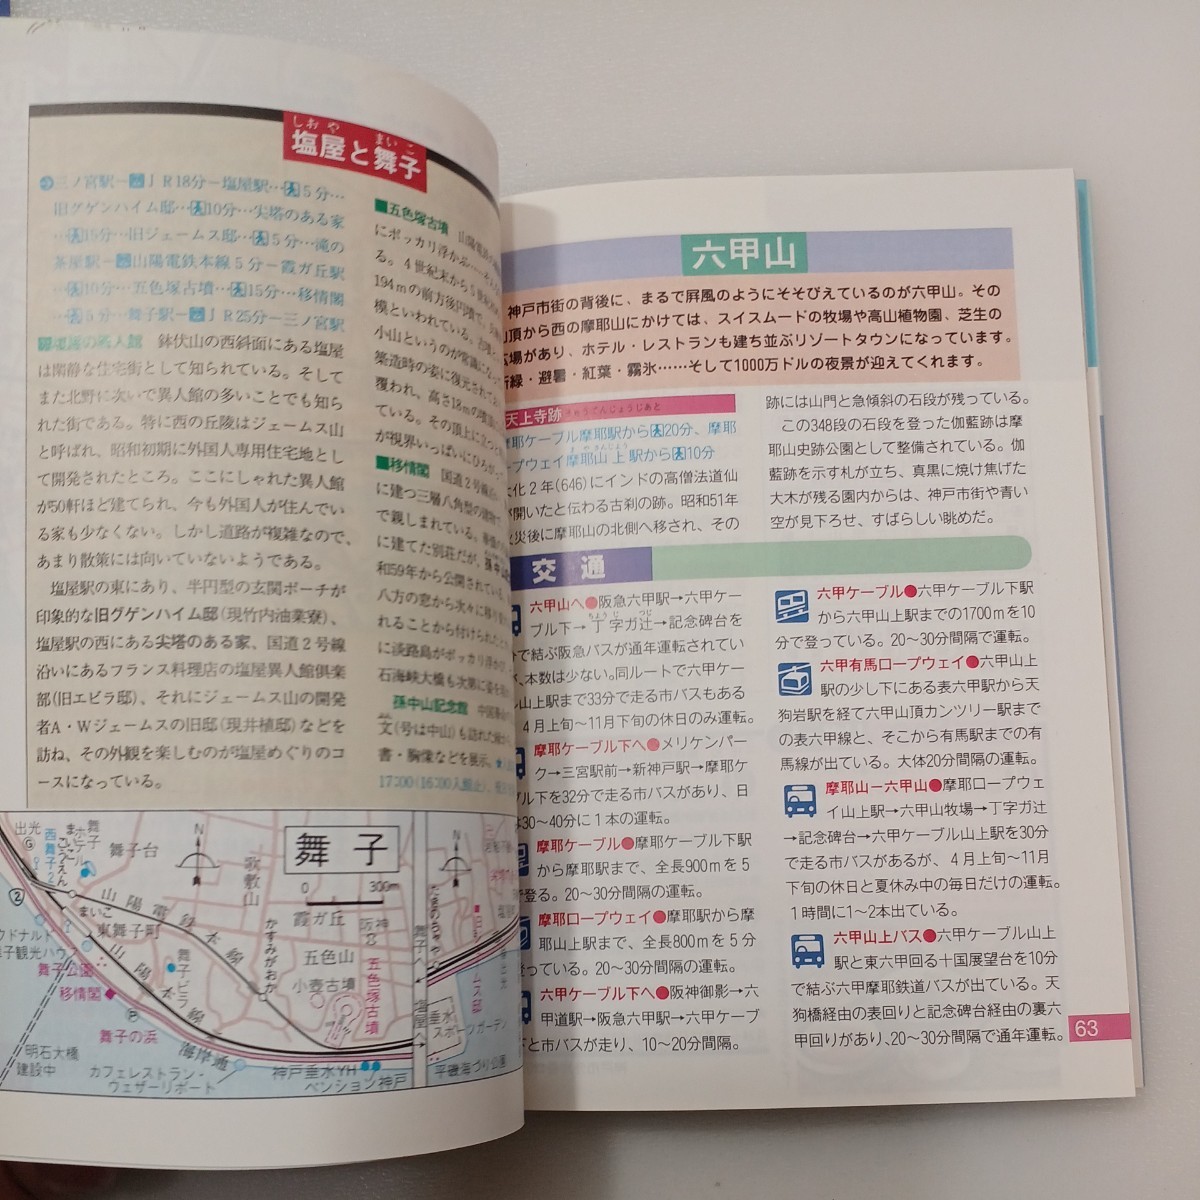 zaa-537!.. map S Nara * Yamato .( modified . no. 10 version )+.. map S Kobe * Osaka exist .. company editing part [ work ] exist .. company (1992/04 sale )